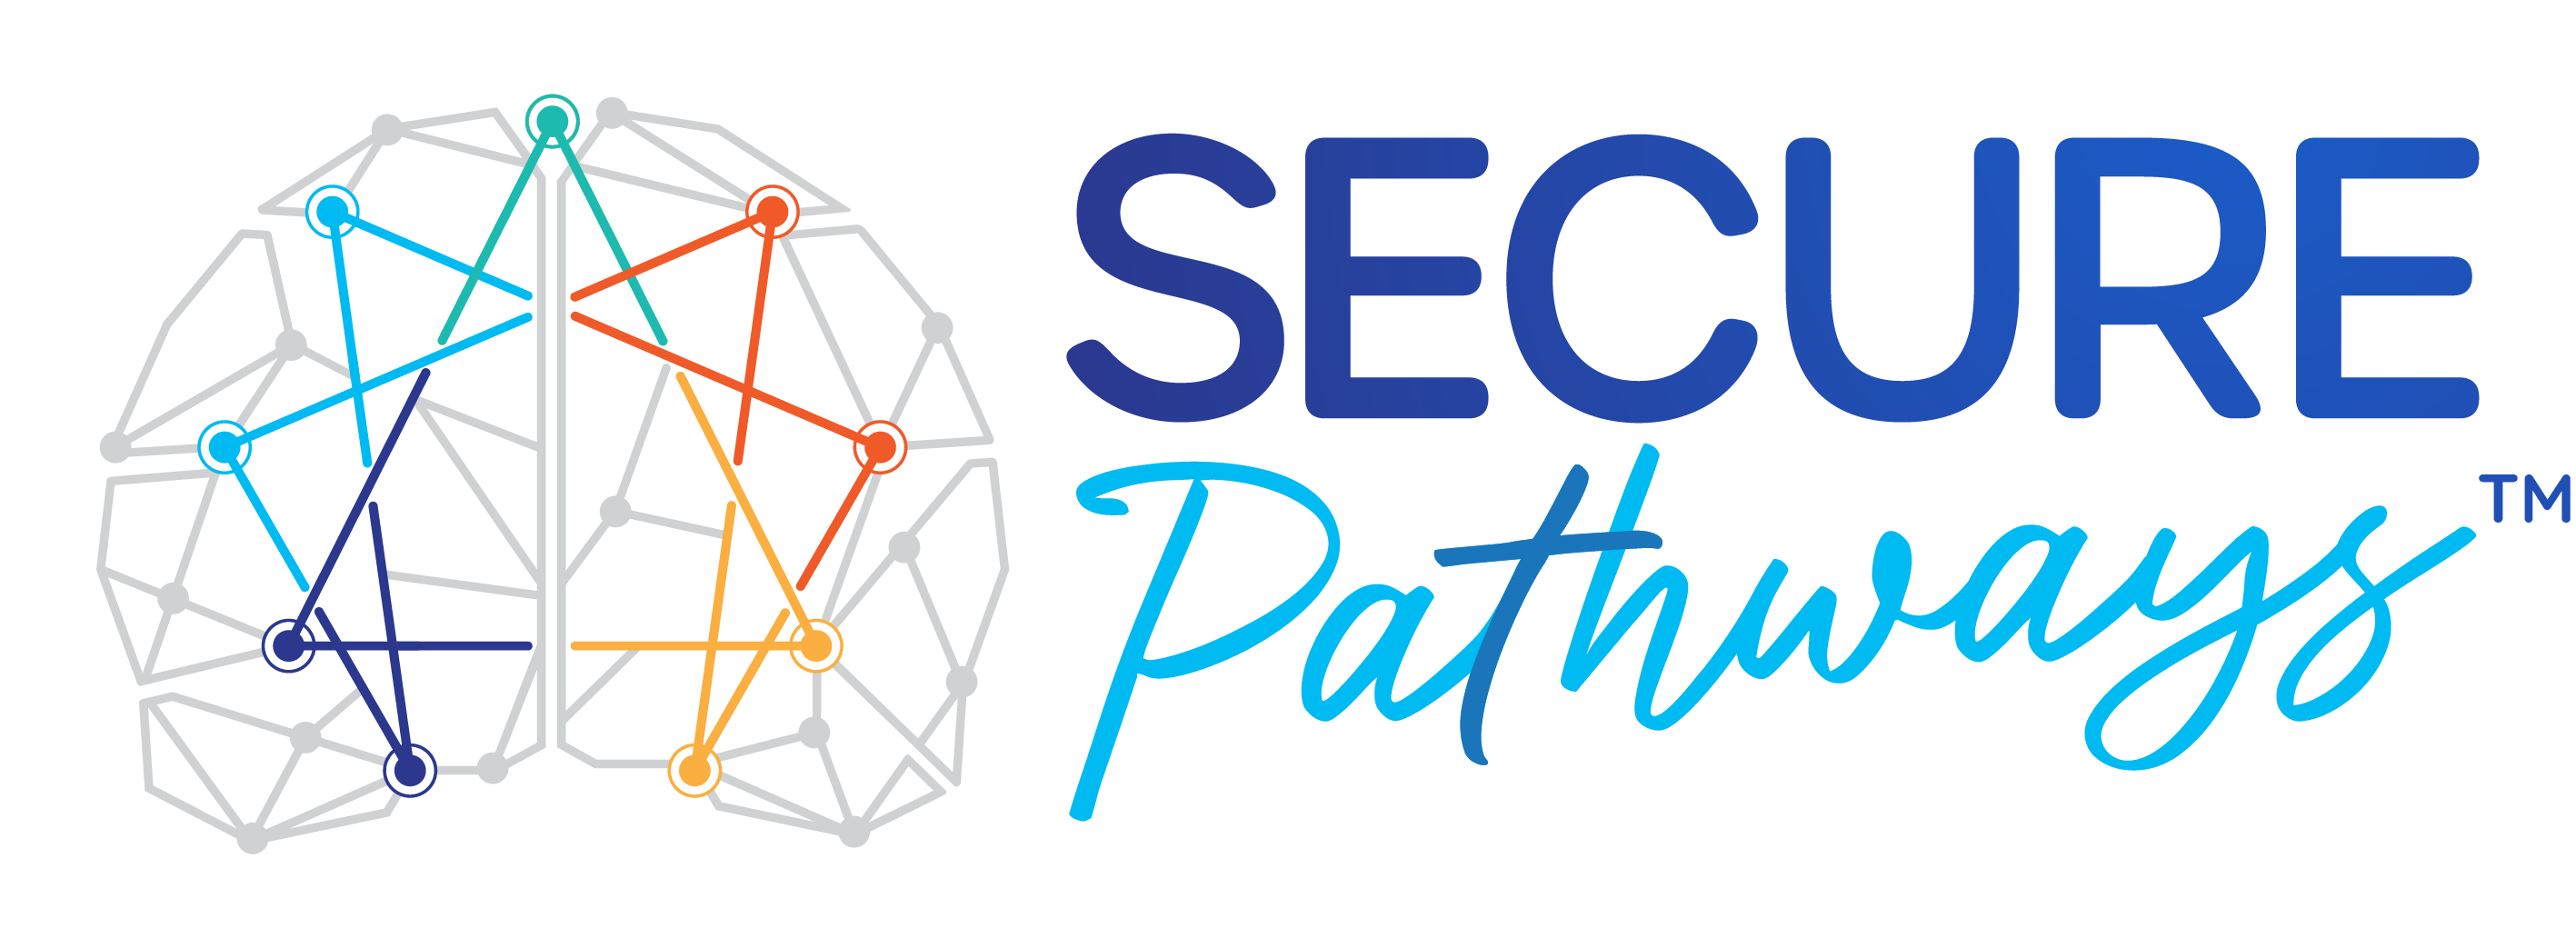 Secure Pathways™ logo